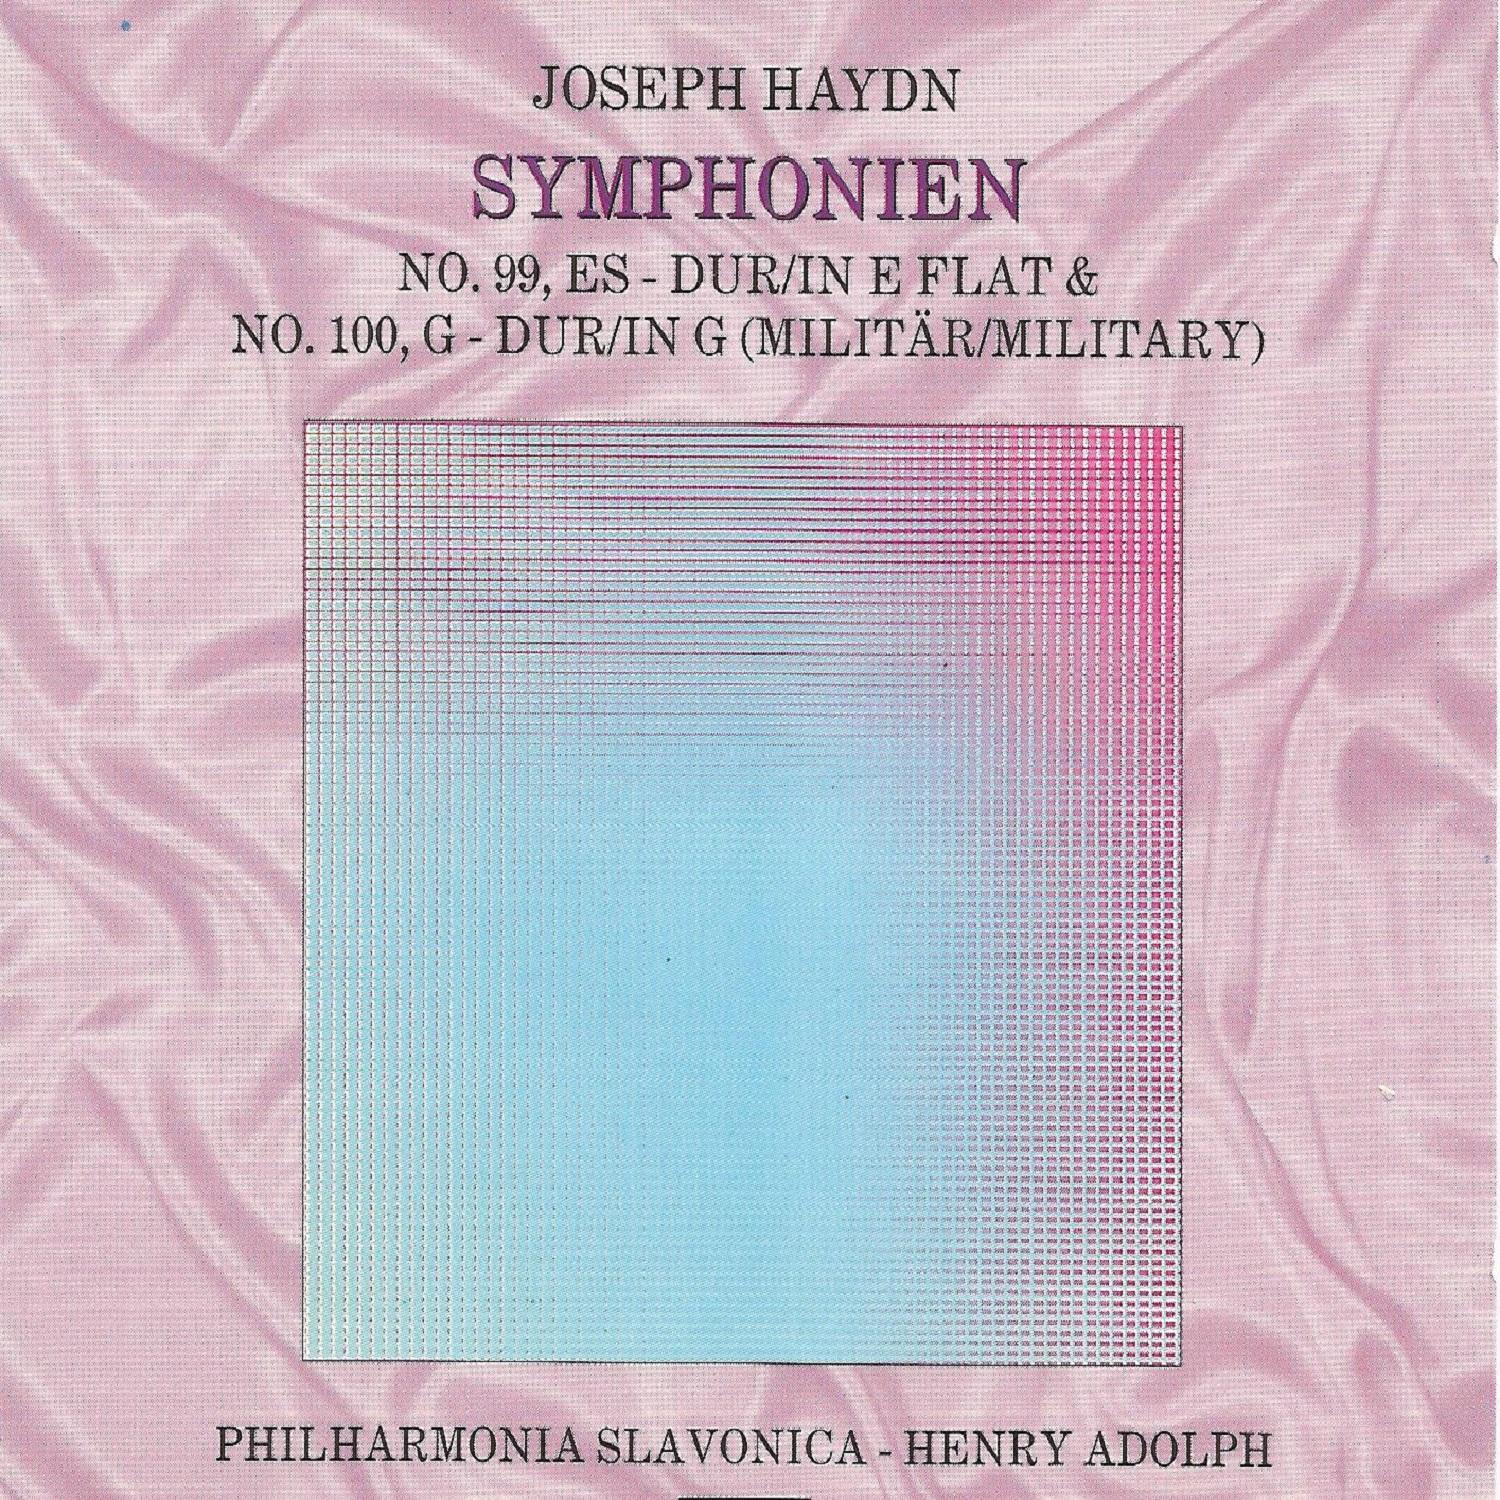 Joseph Haydn - Symphonein No. 99, No. 100